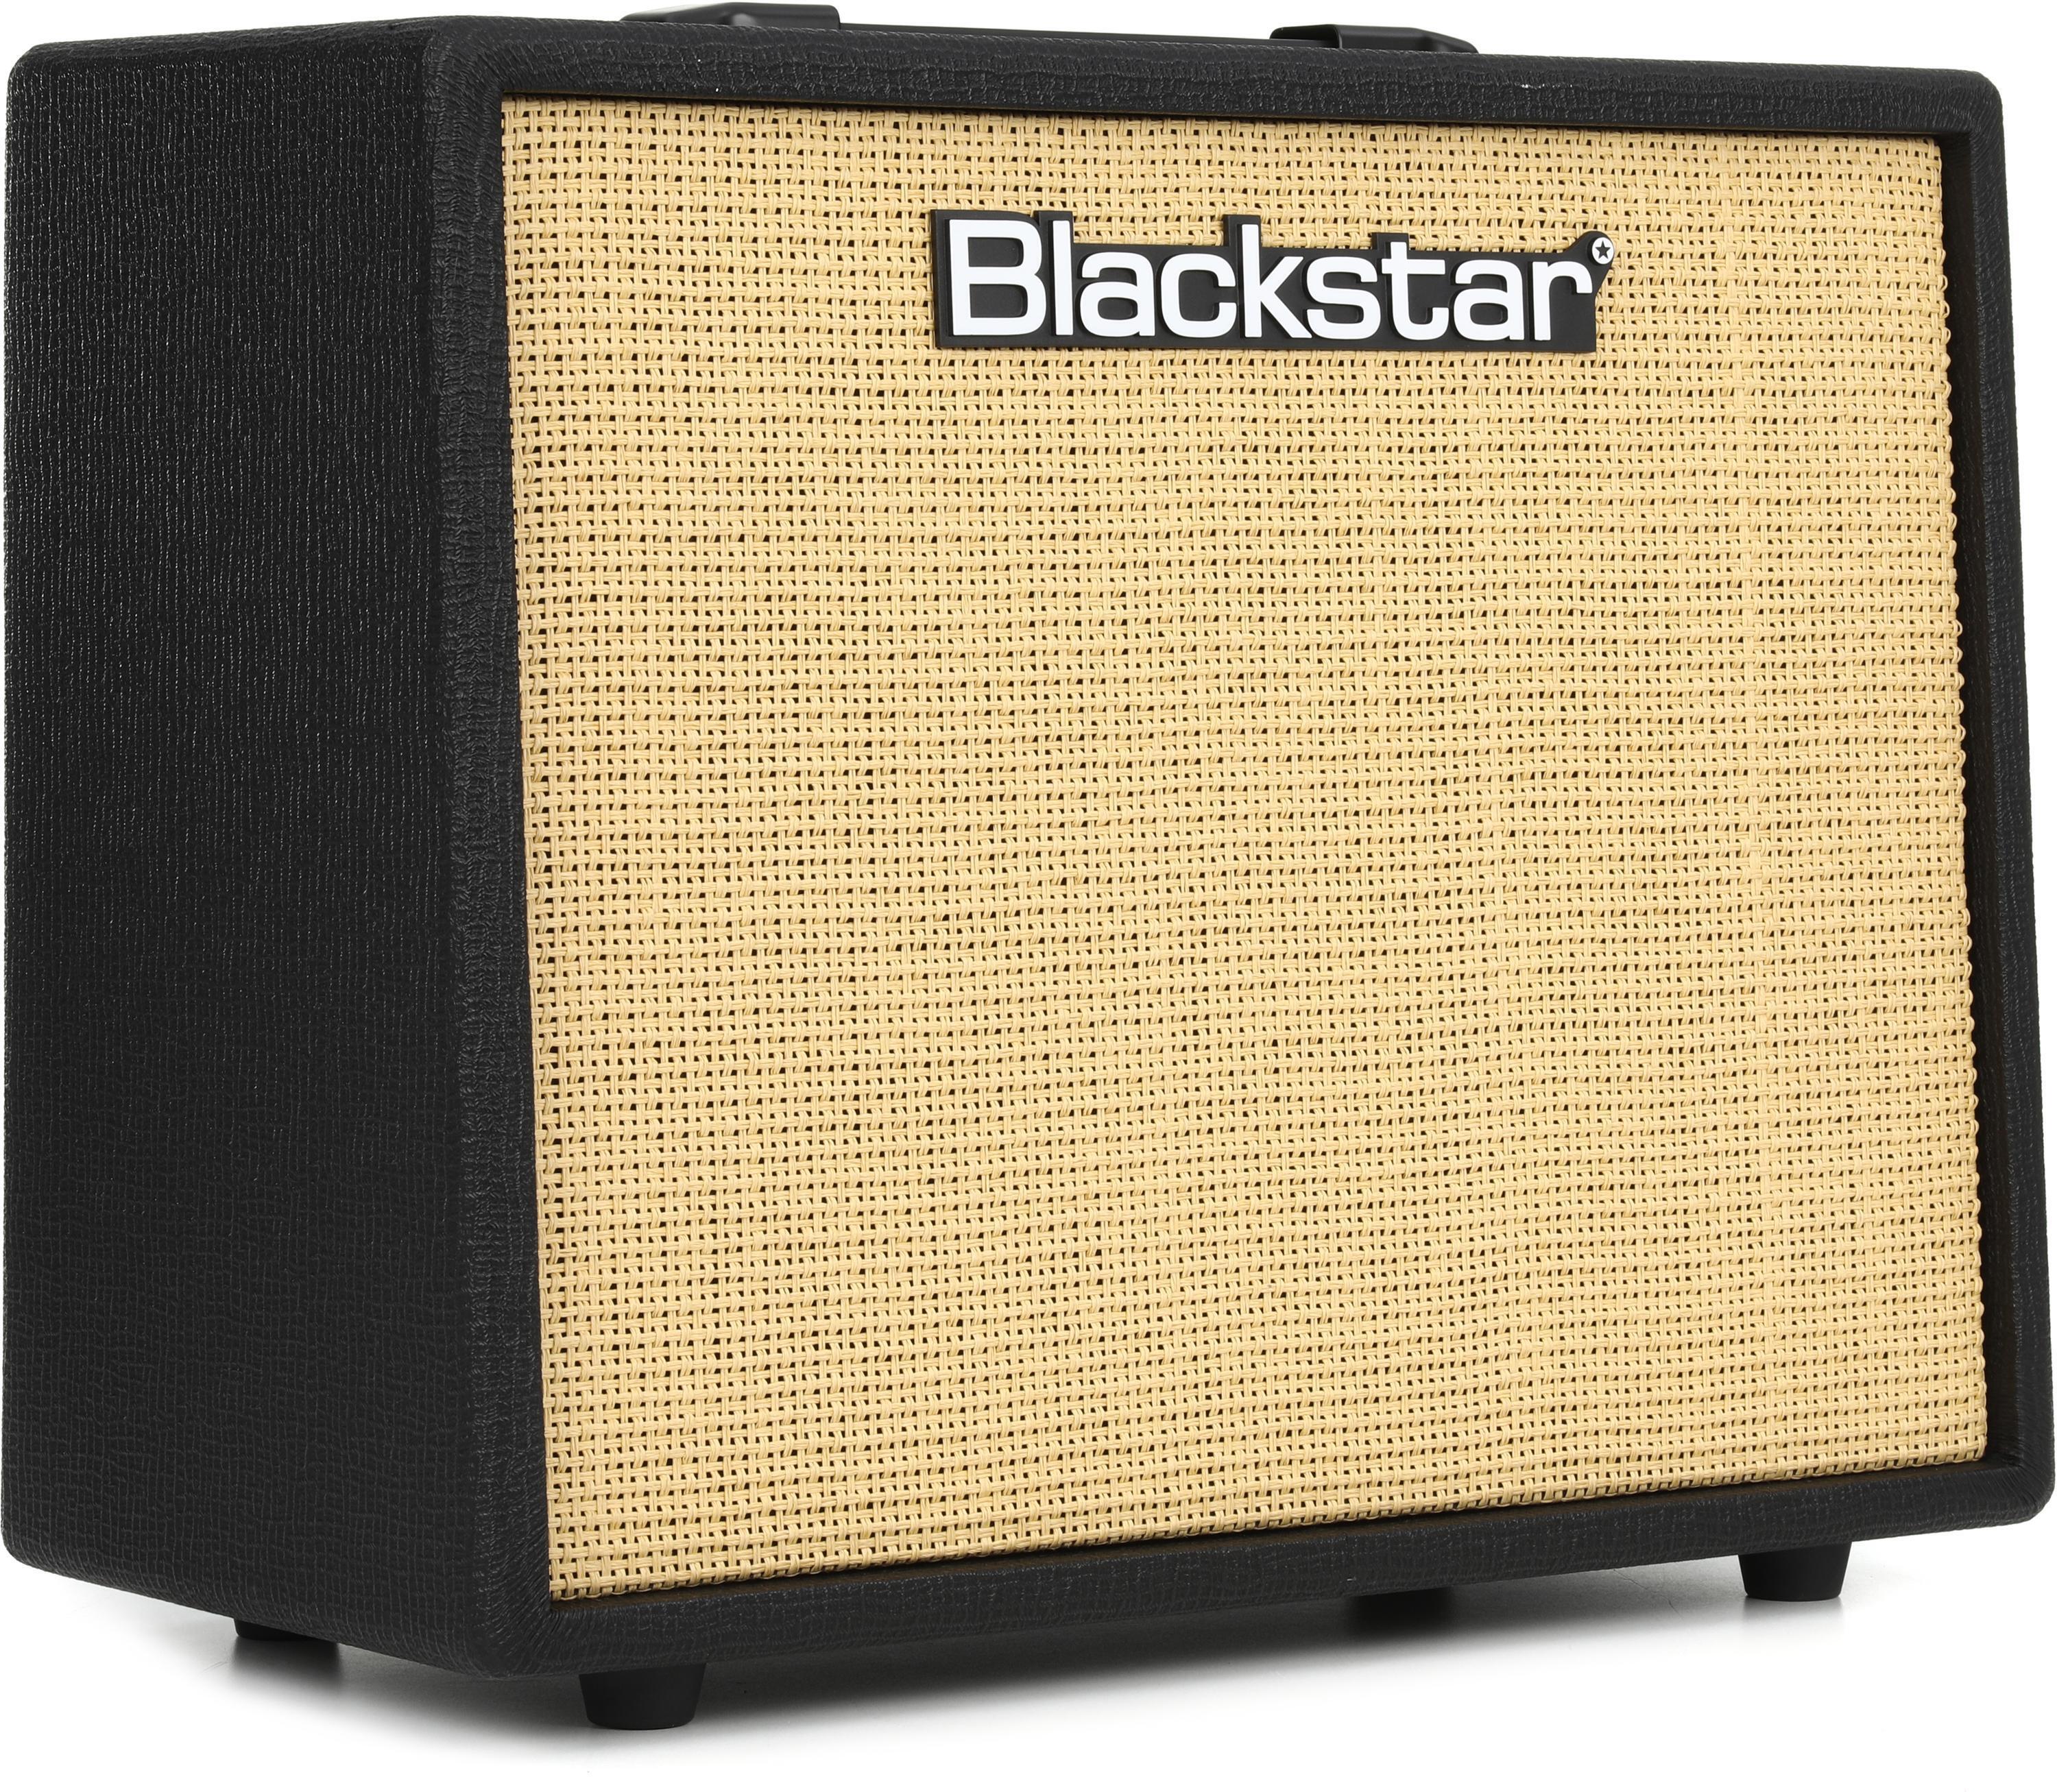 Bundled Item: Blackstar Debut 50R 1 x 12 inch 50-watt Combo Amp - Black